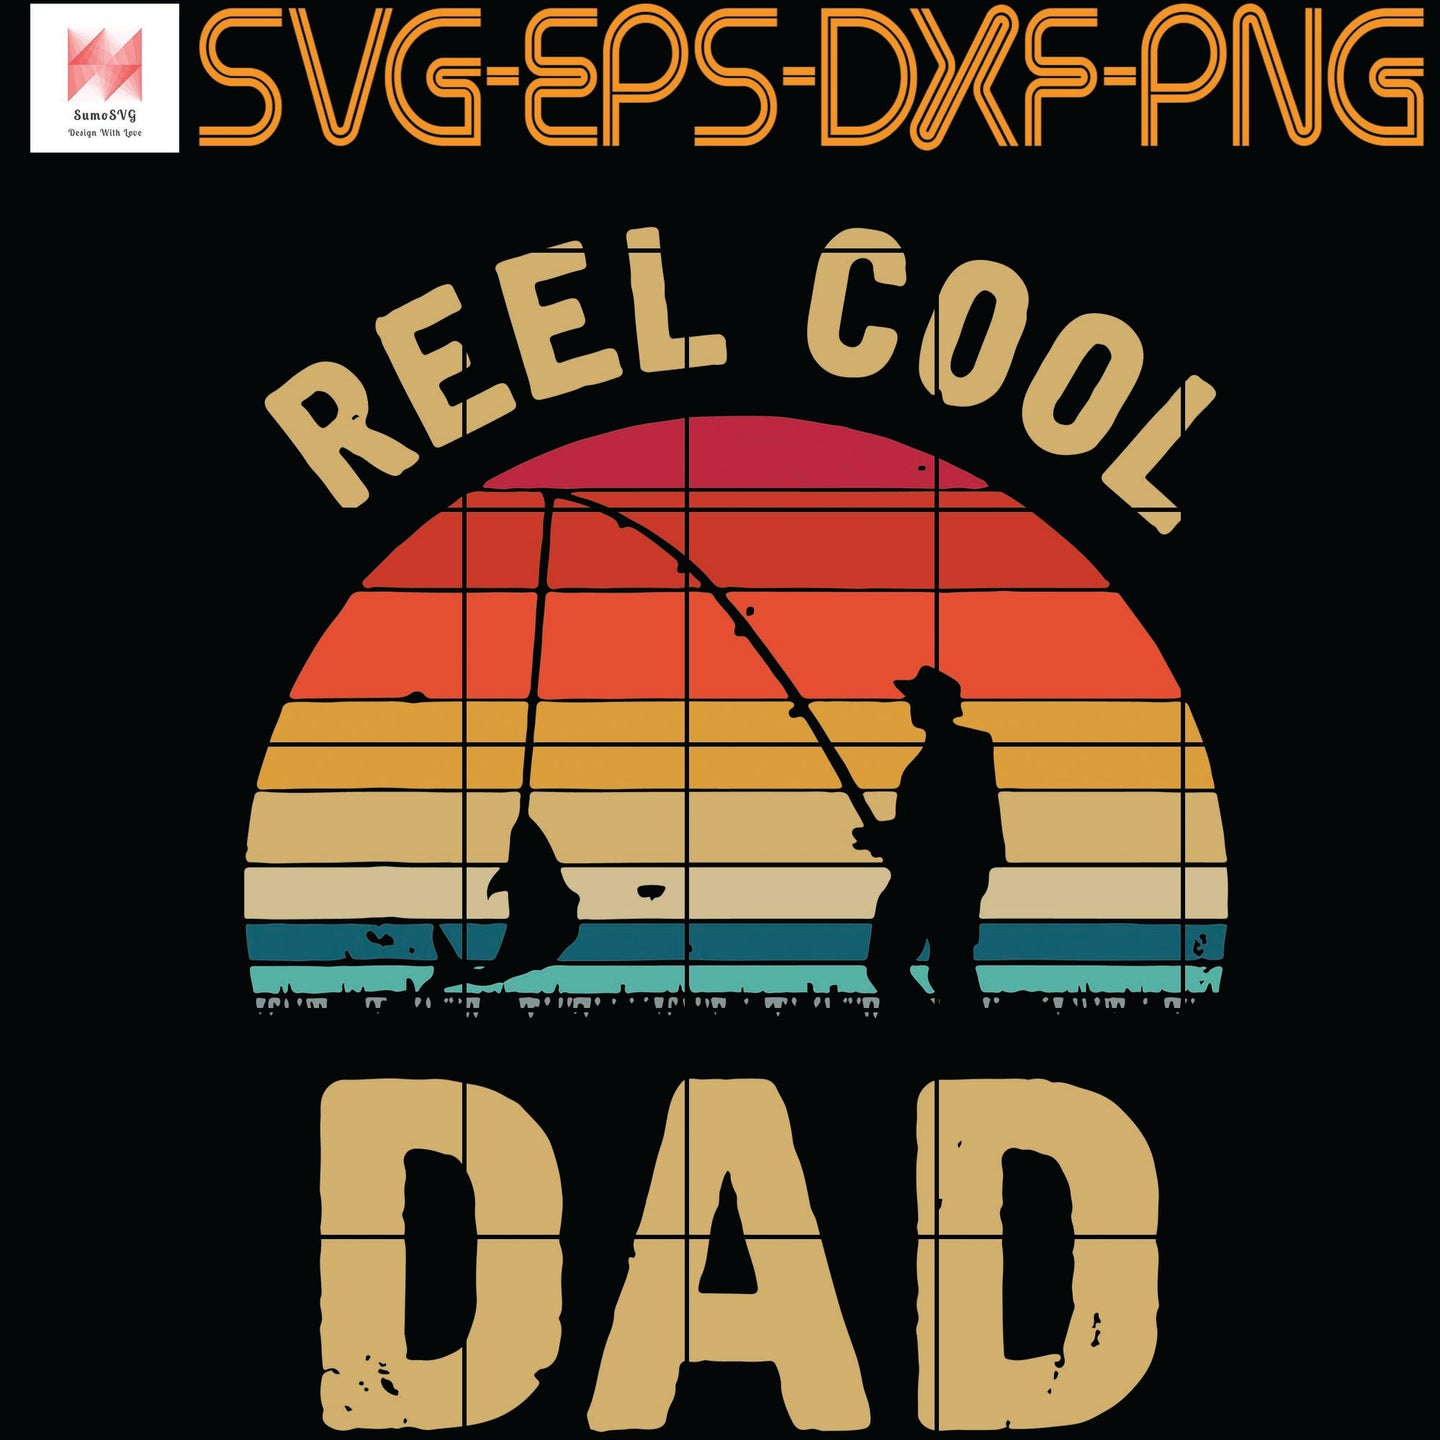 Free Free 73 Reel Cool Dad Fishing Svg SVG PNG EPS DXF File